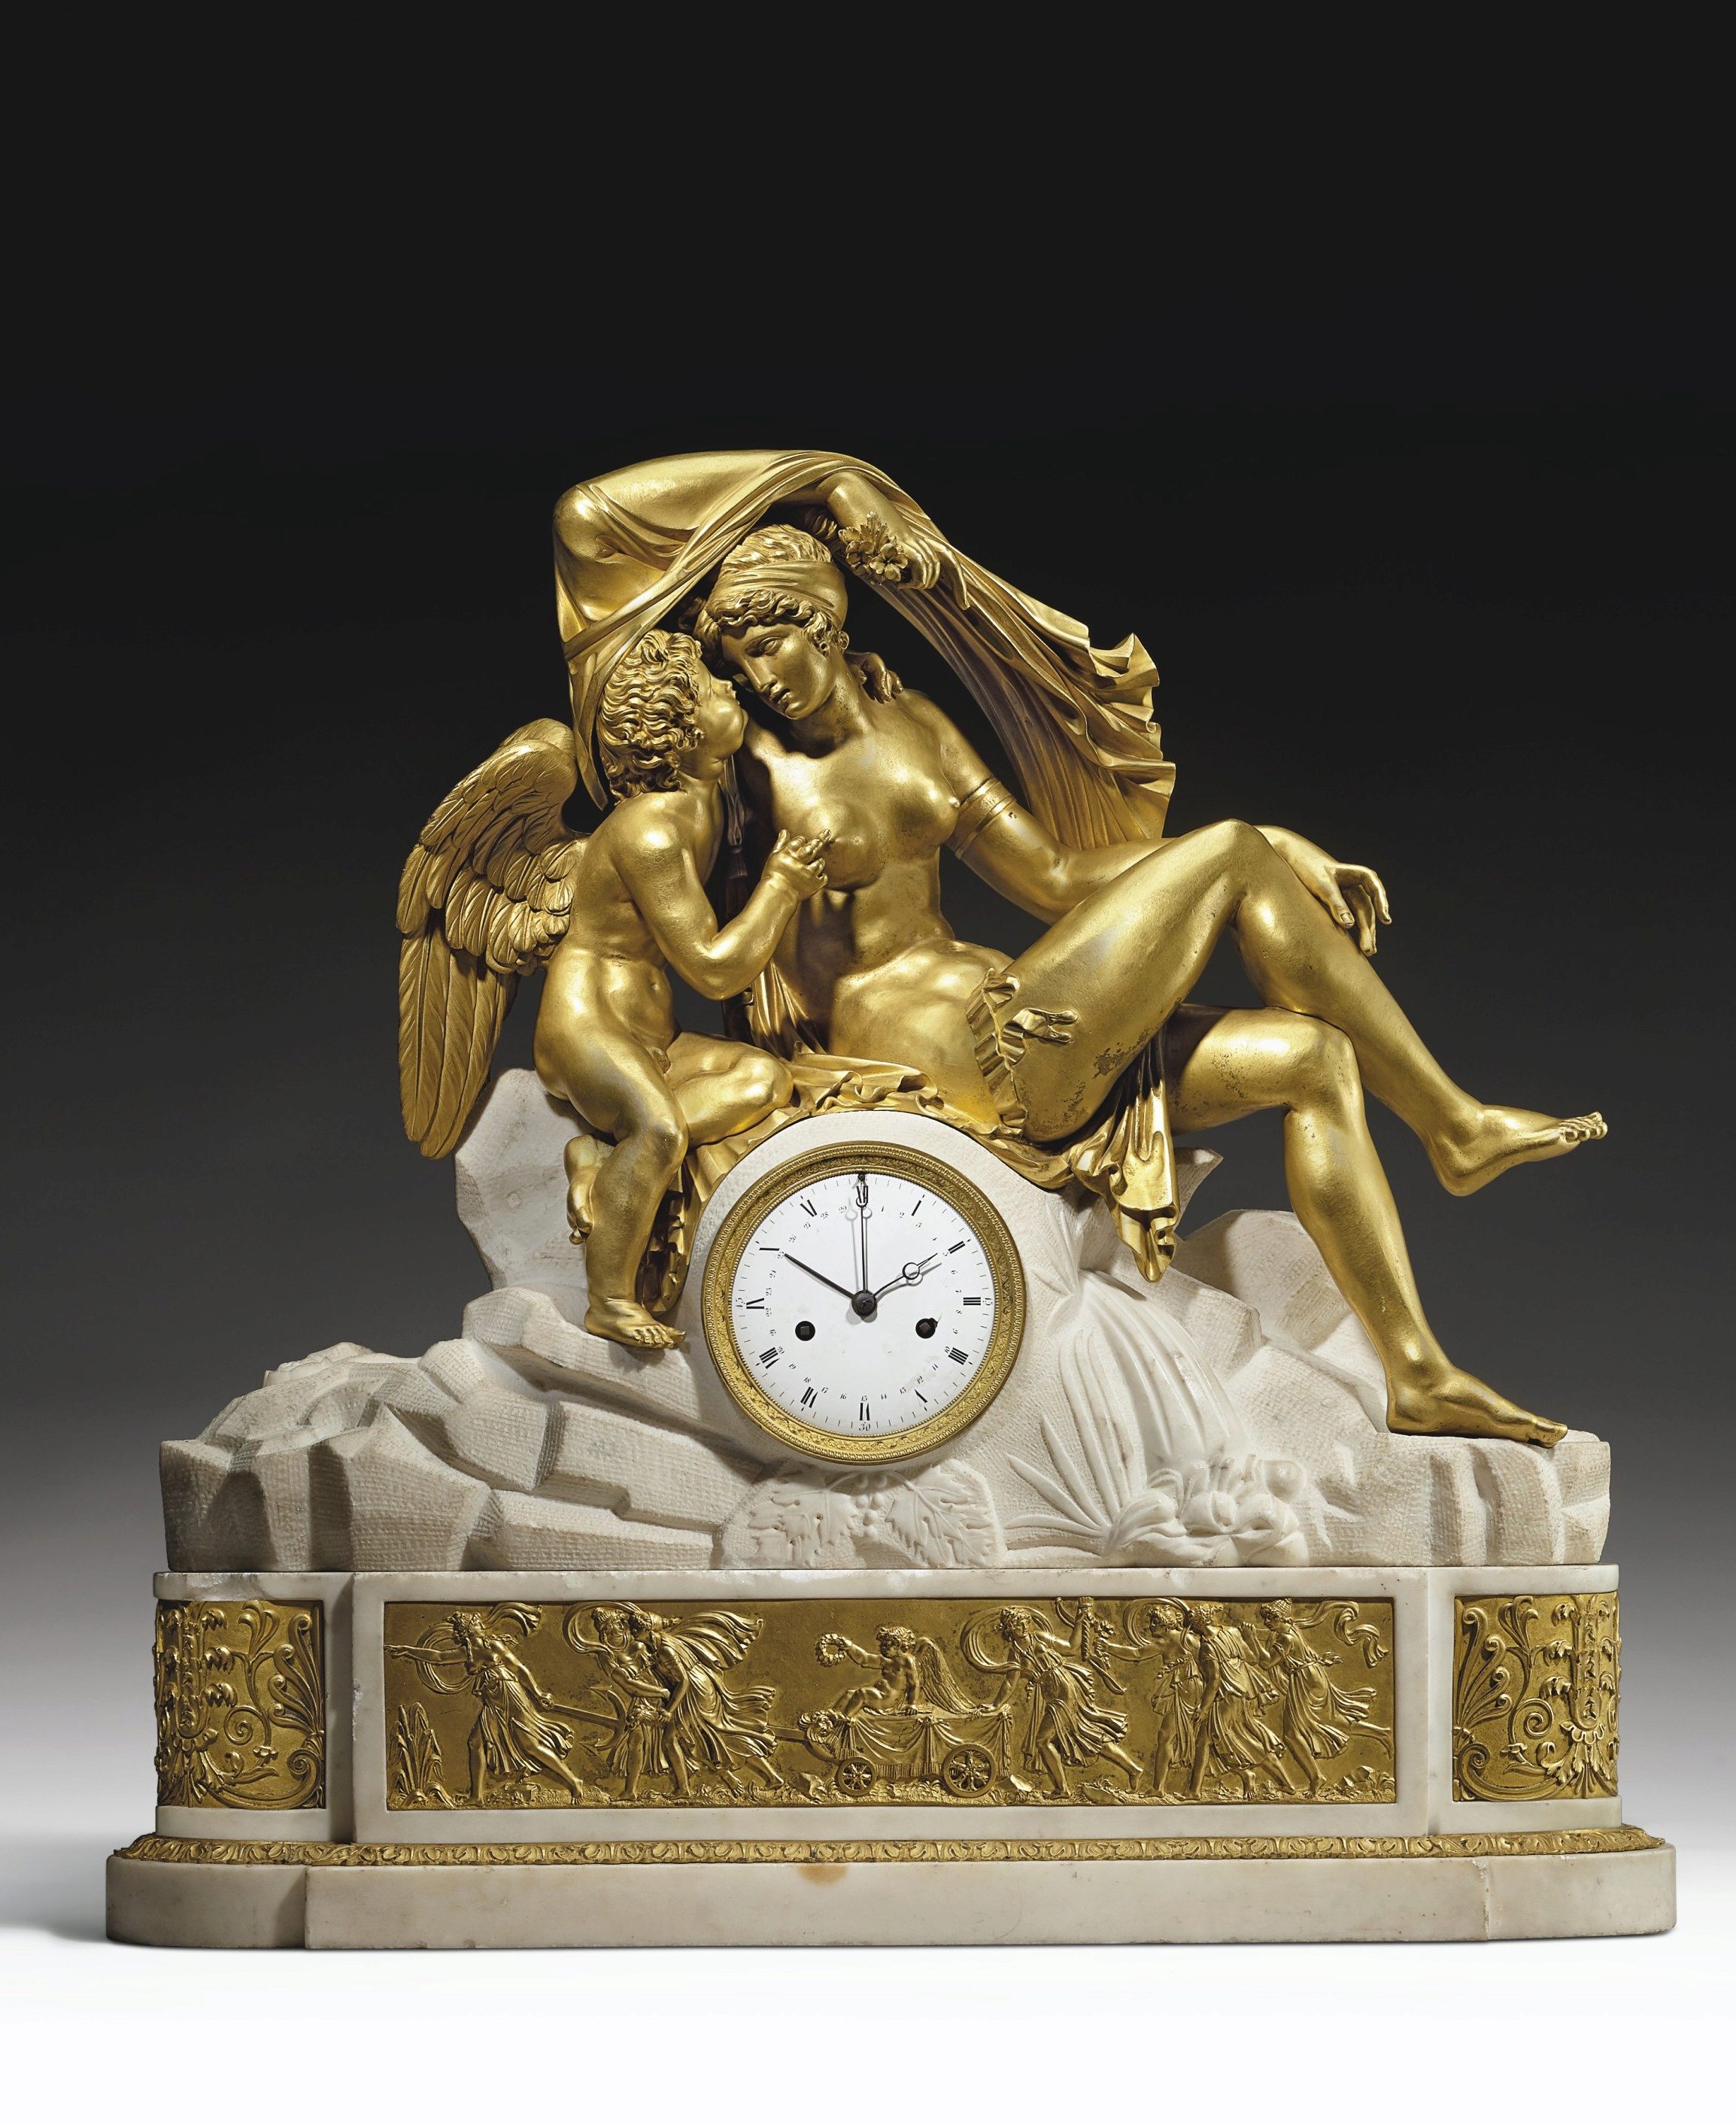 Horloges et pendules du XVIIIe siècle - Page 2 2020_n57